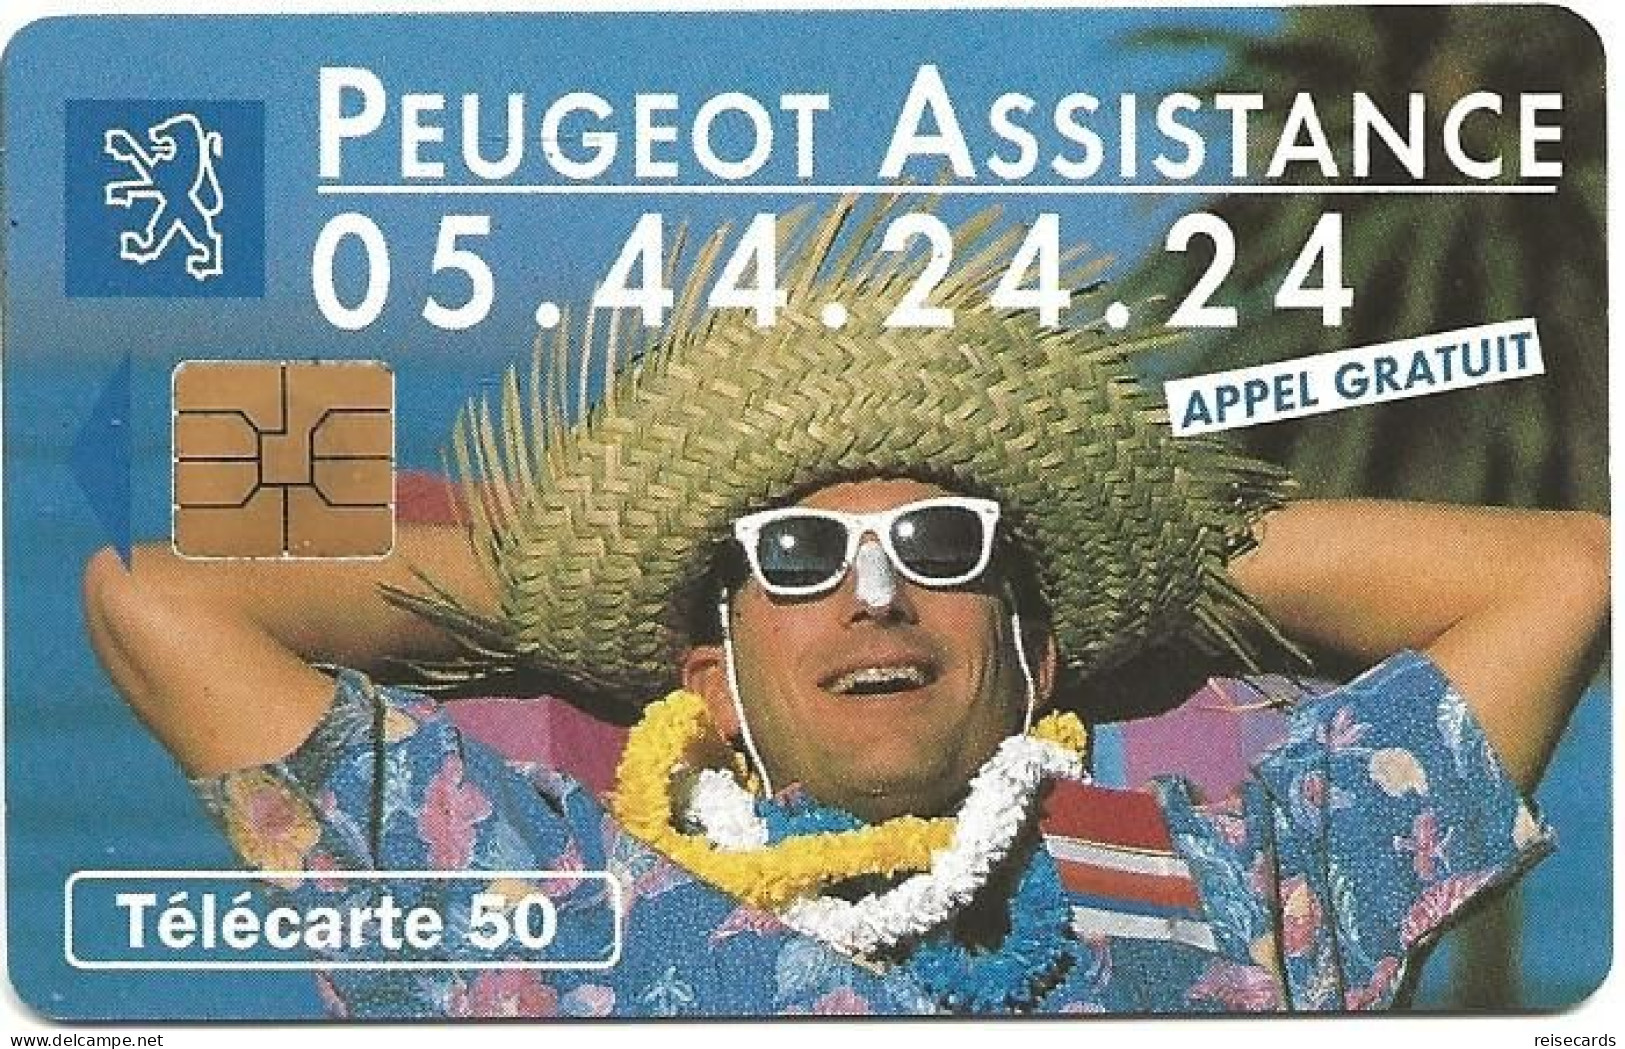 France: France Telecom 07.93 F387 Peugeot Assistance - 1993